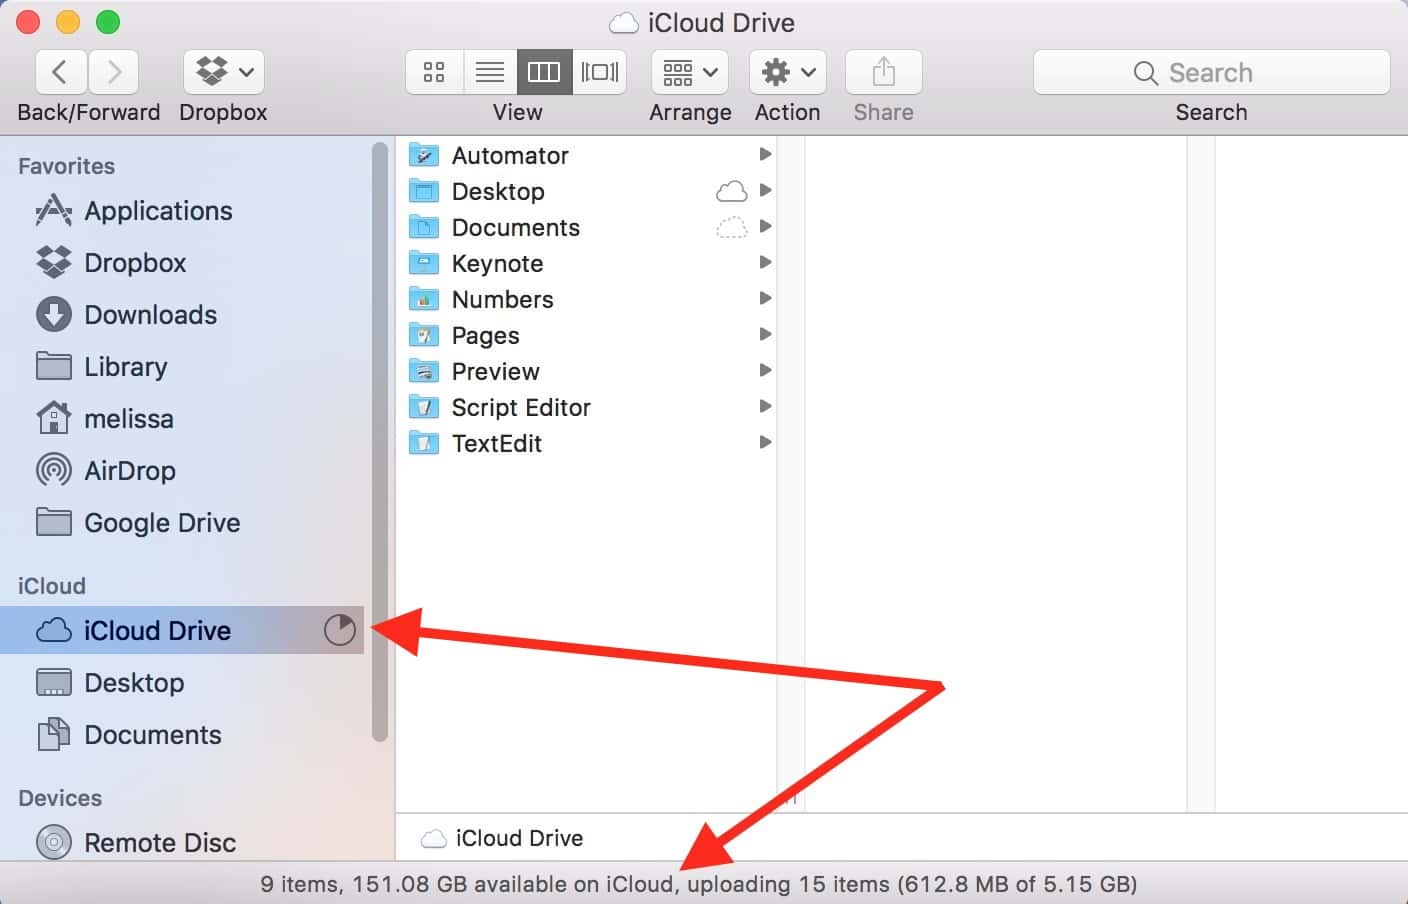 Finder window Status Bar showing detailed information about iCloud Drive file upload progress